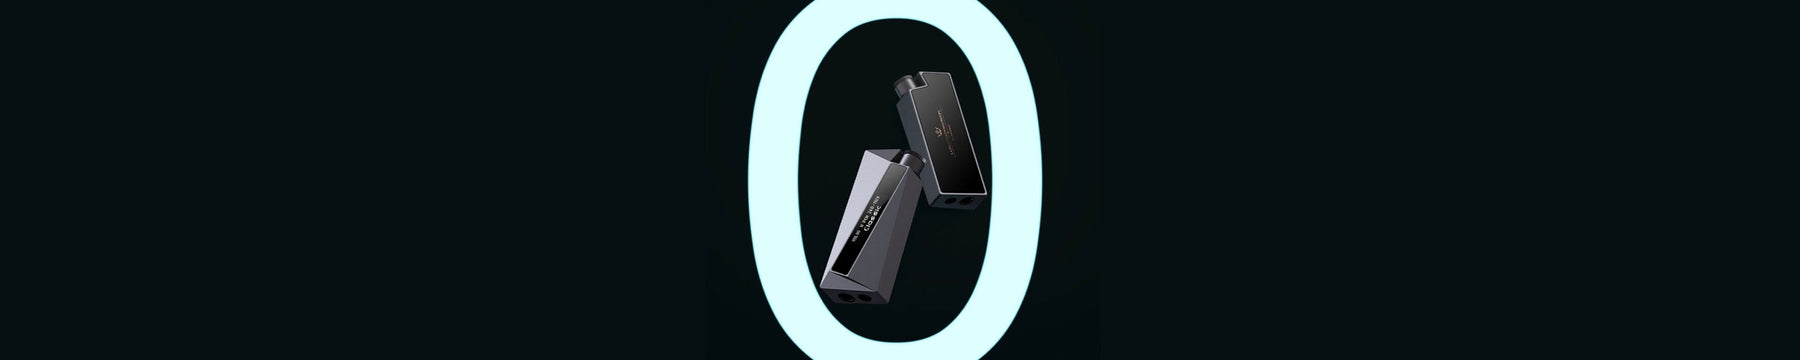 Luxury & Precision Launches "W4" & "W4-Ex" Flagship Portable USB DAC/AMPs